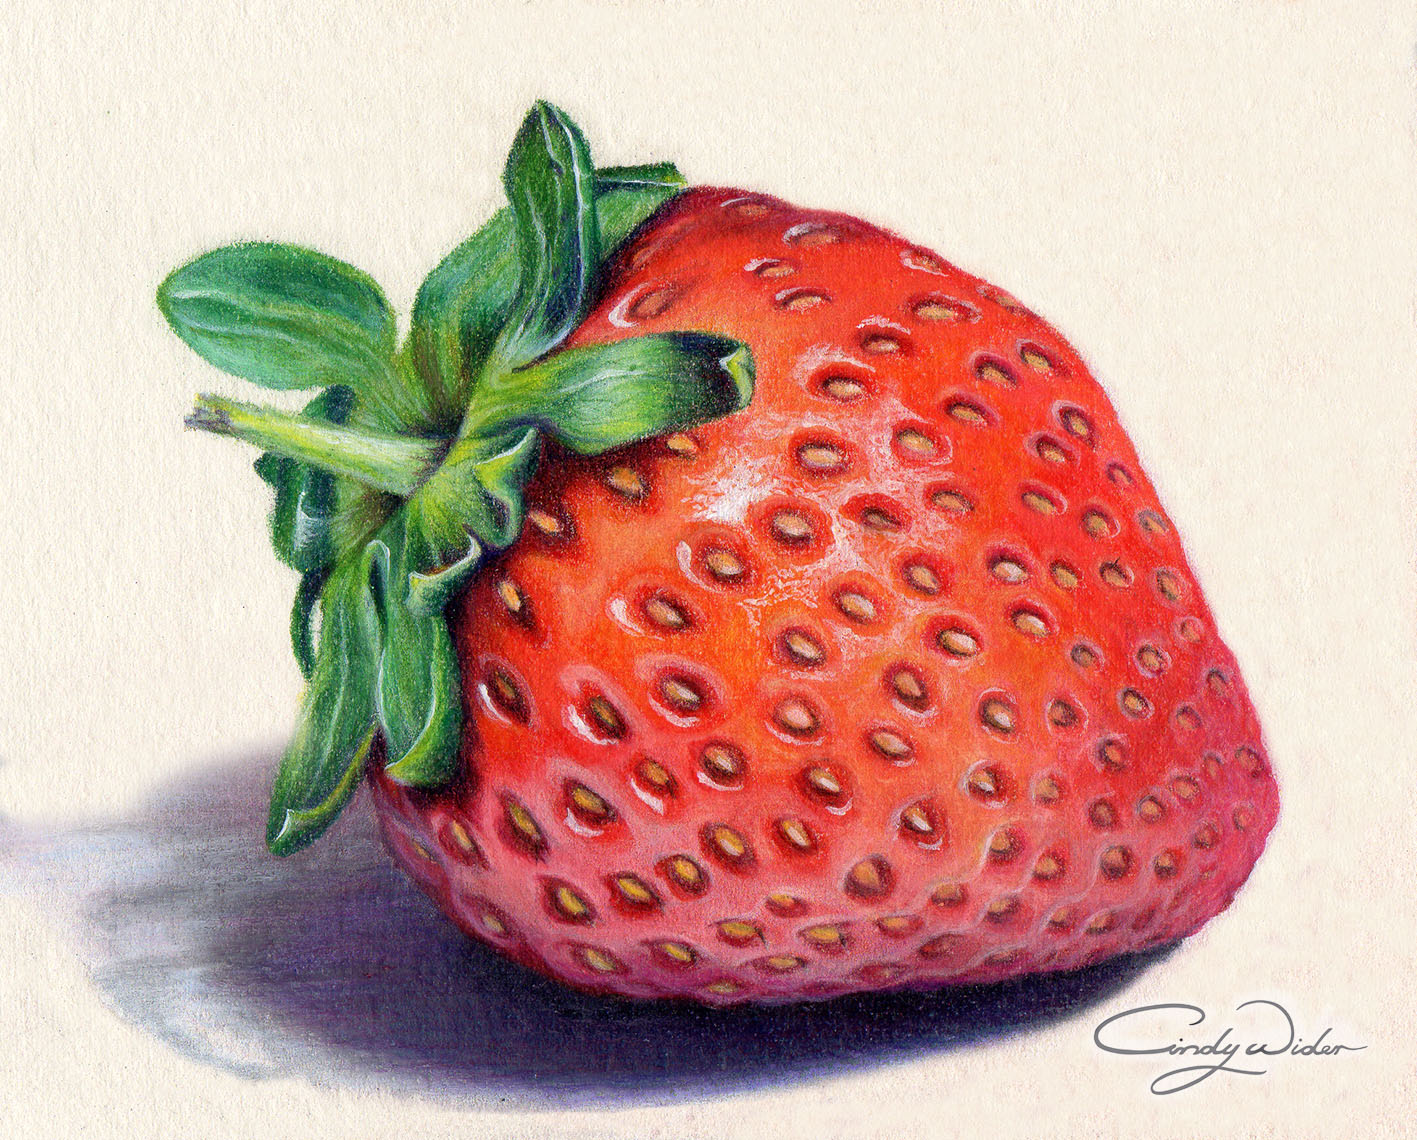 https://drawpj.com/wp-content/uploads/2014/10/strawberry-coloured-pencil-cindy-wider-small-1.jpg